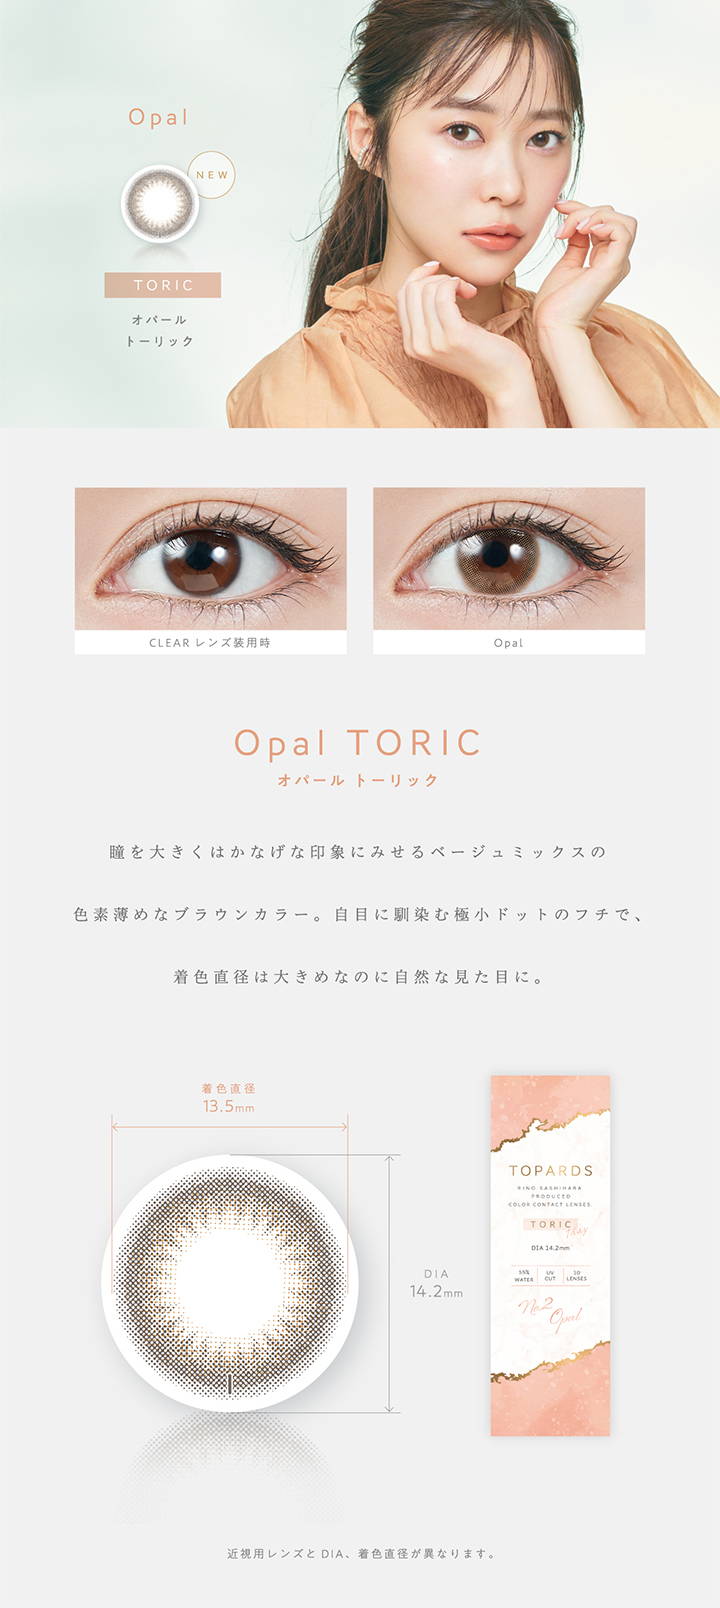 Opal TORIC(オパールトーリック),新色,瞳を大きくはかなげな印象にみせるベージュミックスの色素薄めなブラウンカラー。自目になじむ極小ドットのフチで、直色直径は大きめなのに自然な見た目に。,着色直径13.5mm,DIA14.2mm|TOPARDS TORIC(トパーズトーリック)コンタクトレンズ